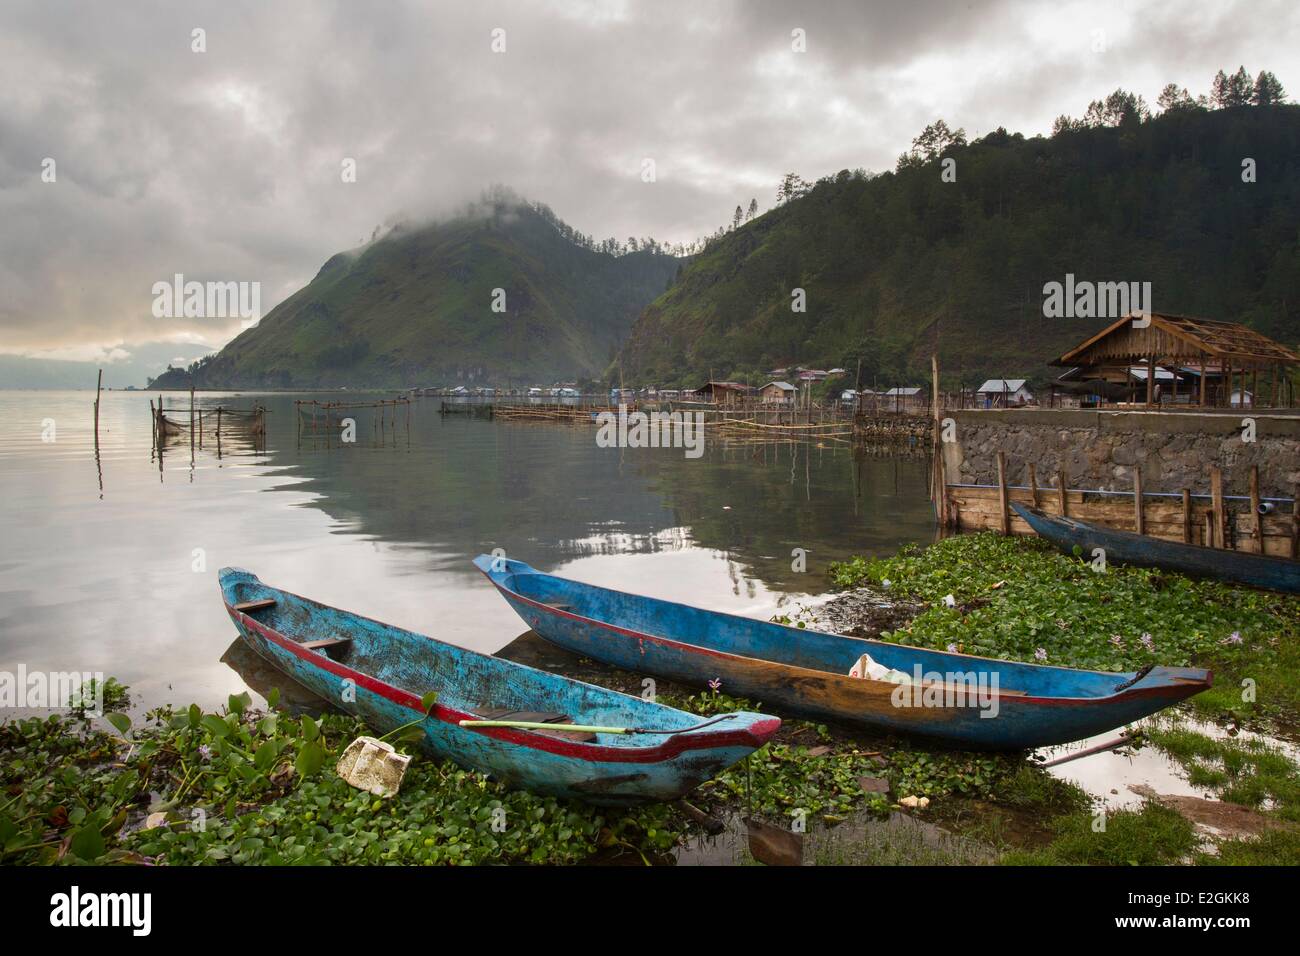 Indonesia Sumatra Island Aceh province Takengon Pirogues on Laut Tawar Lake bank Stock Photo